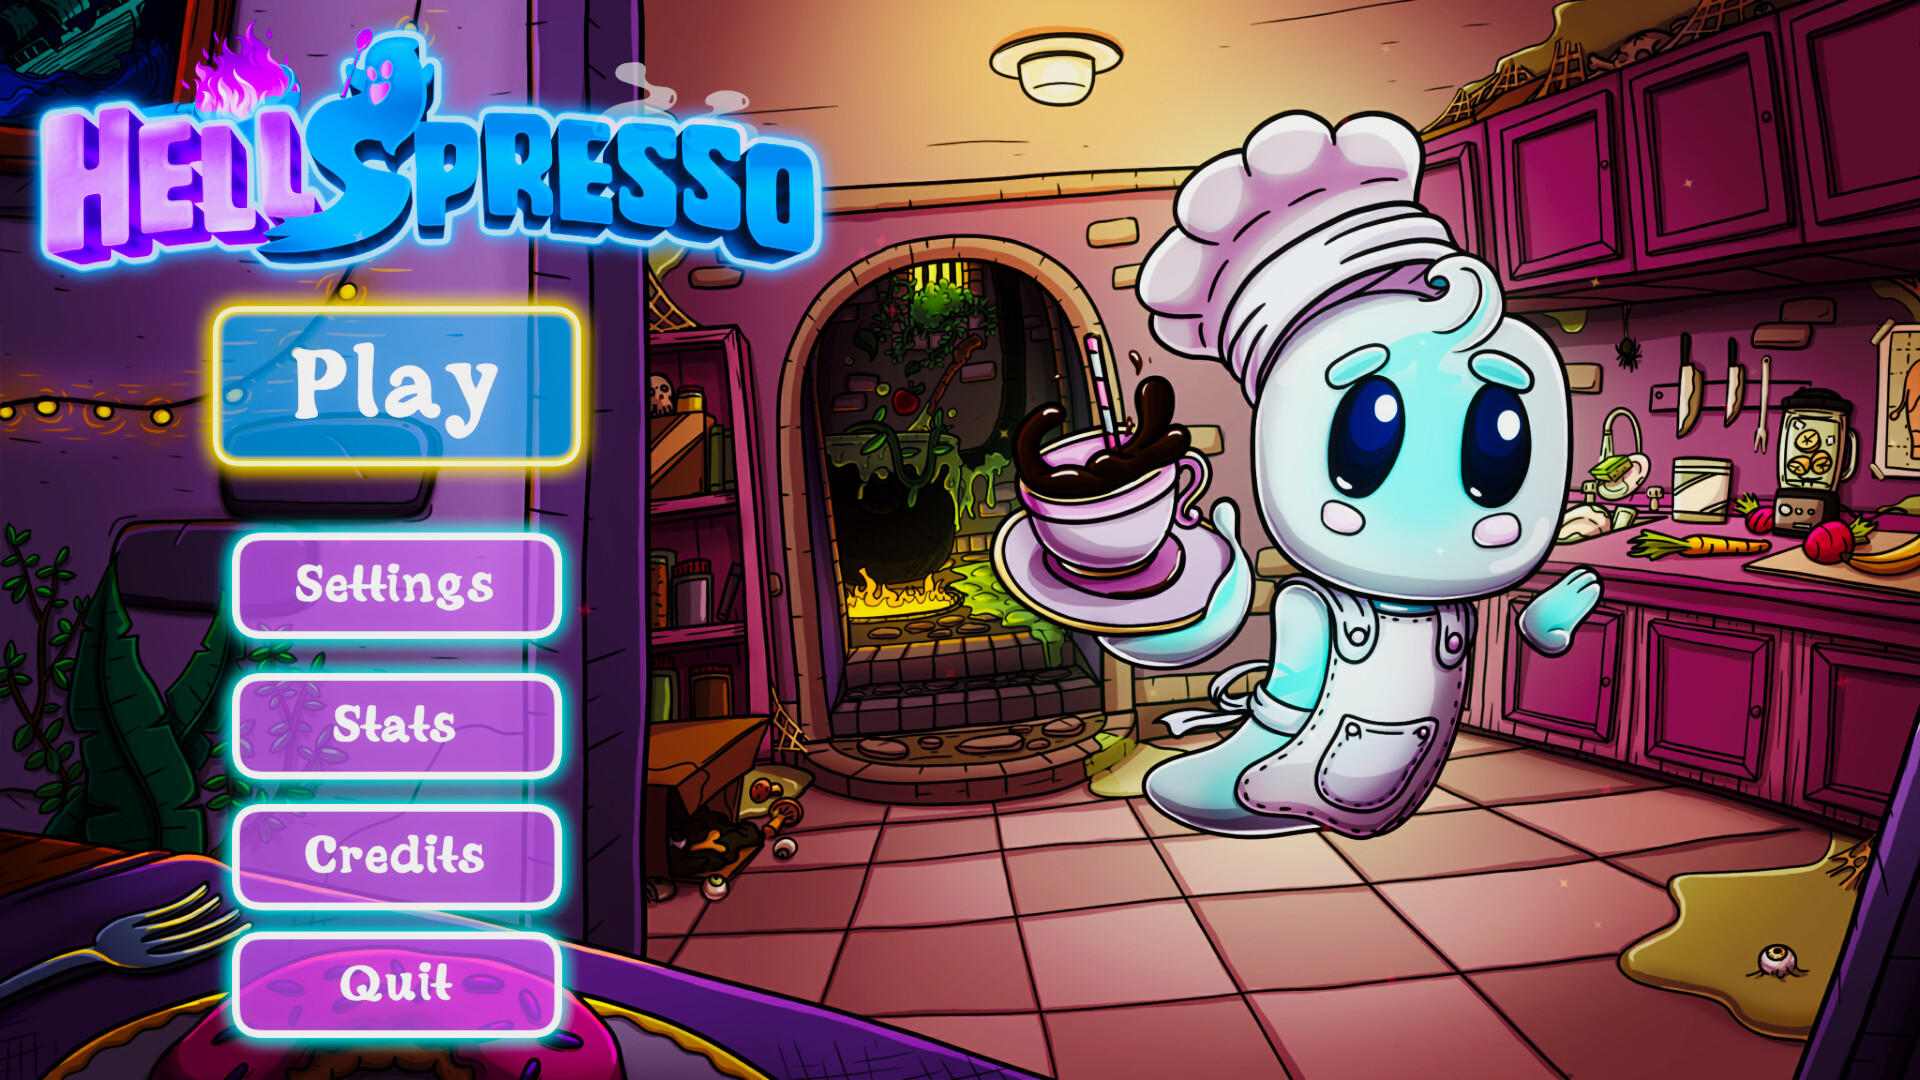 Screenshot of Hellspresso